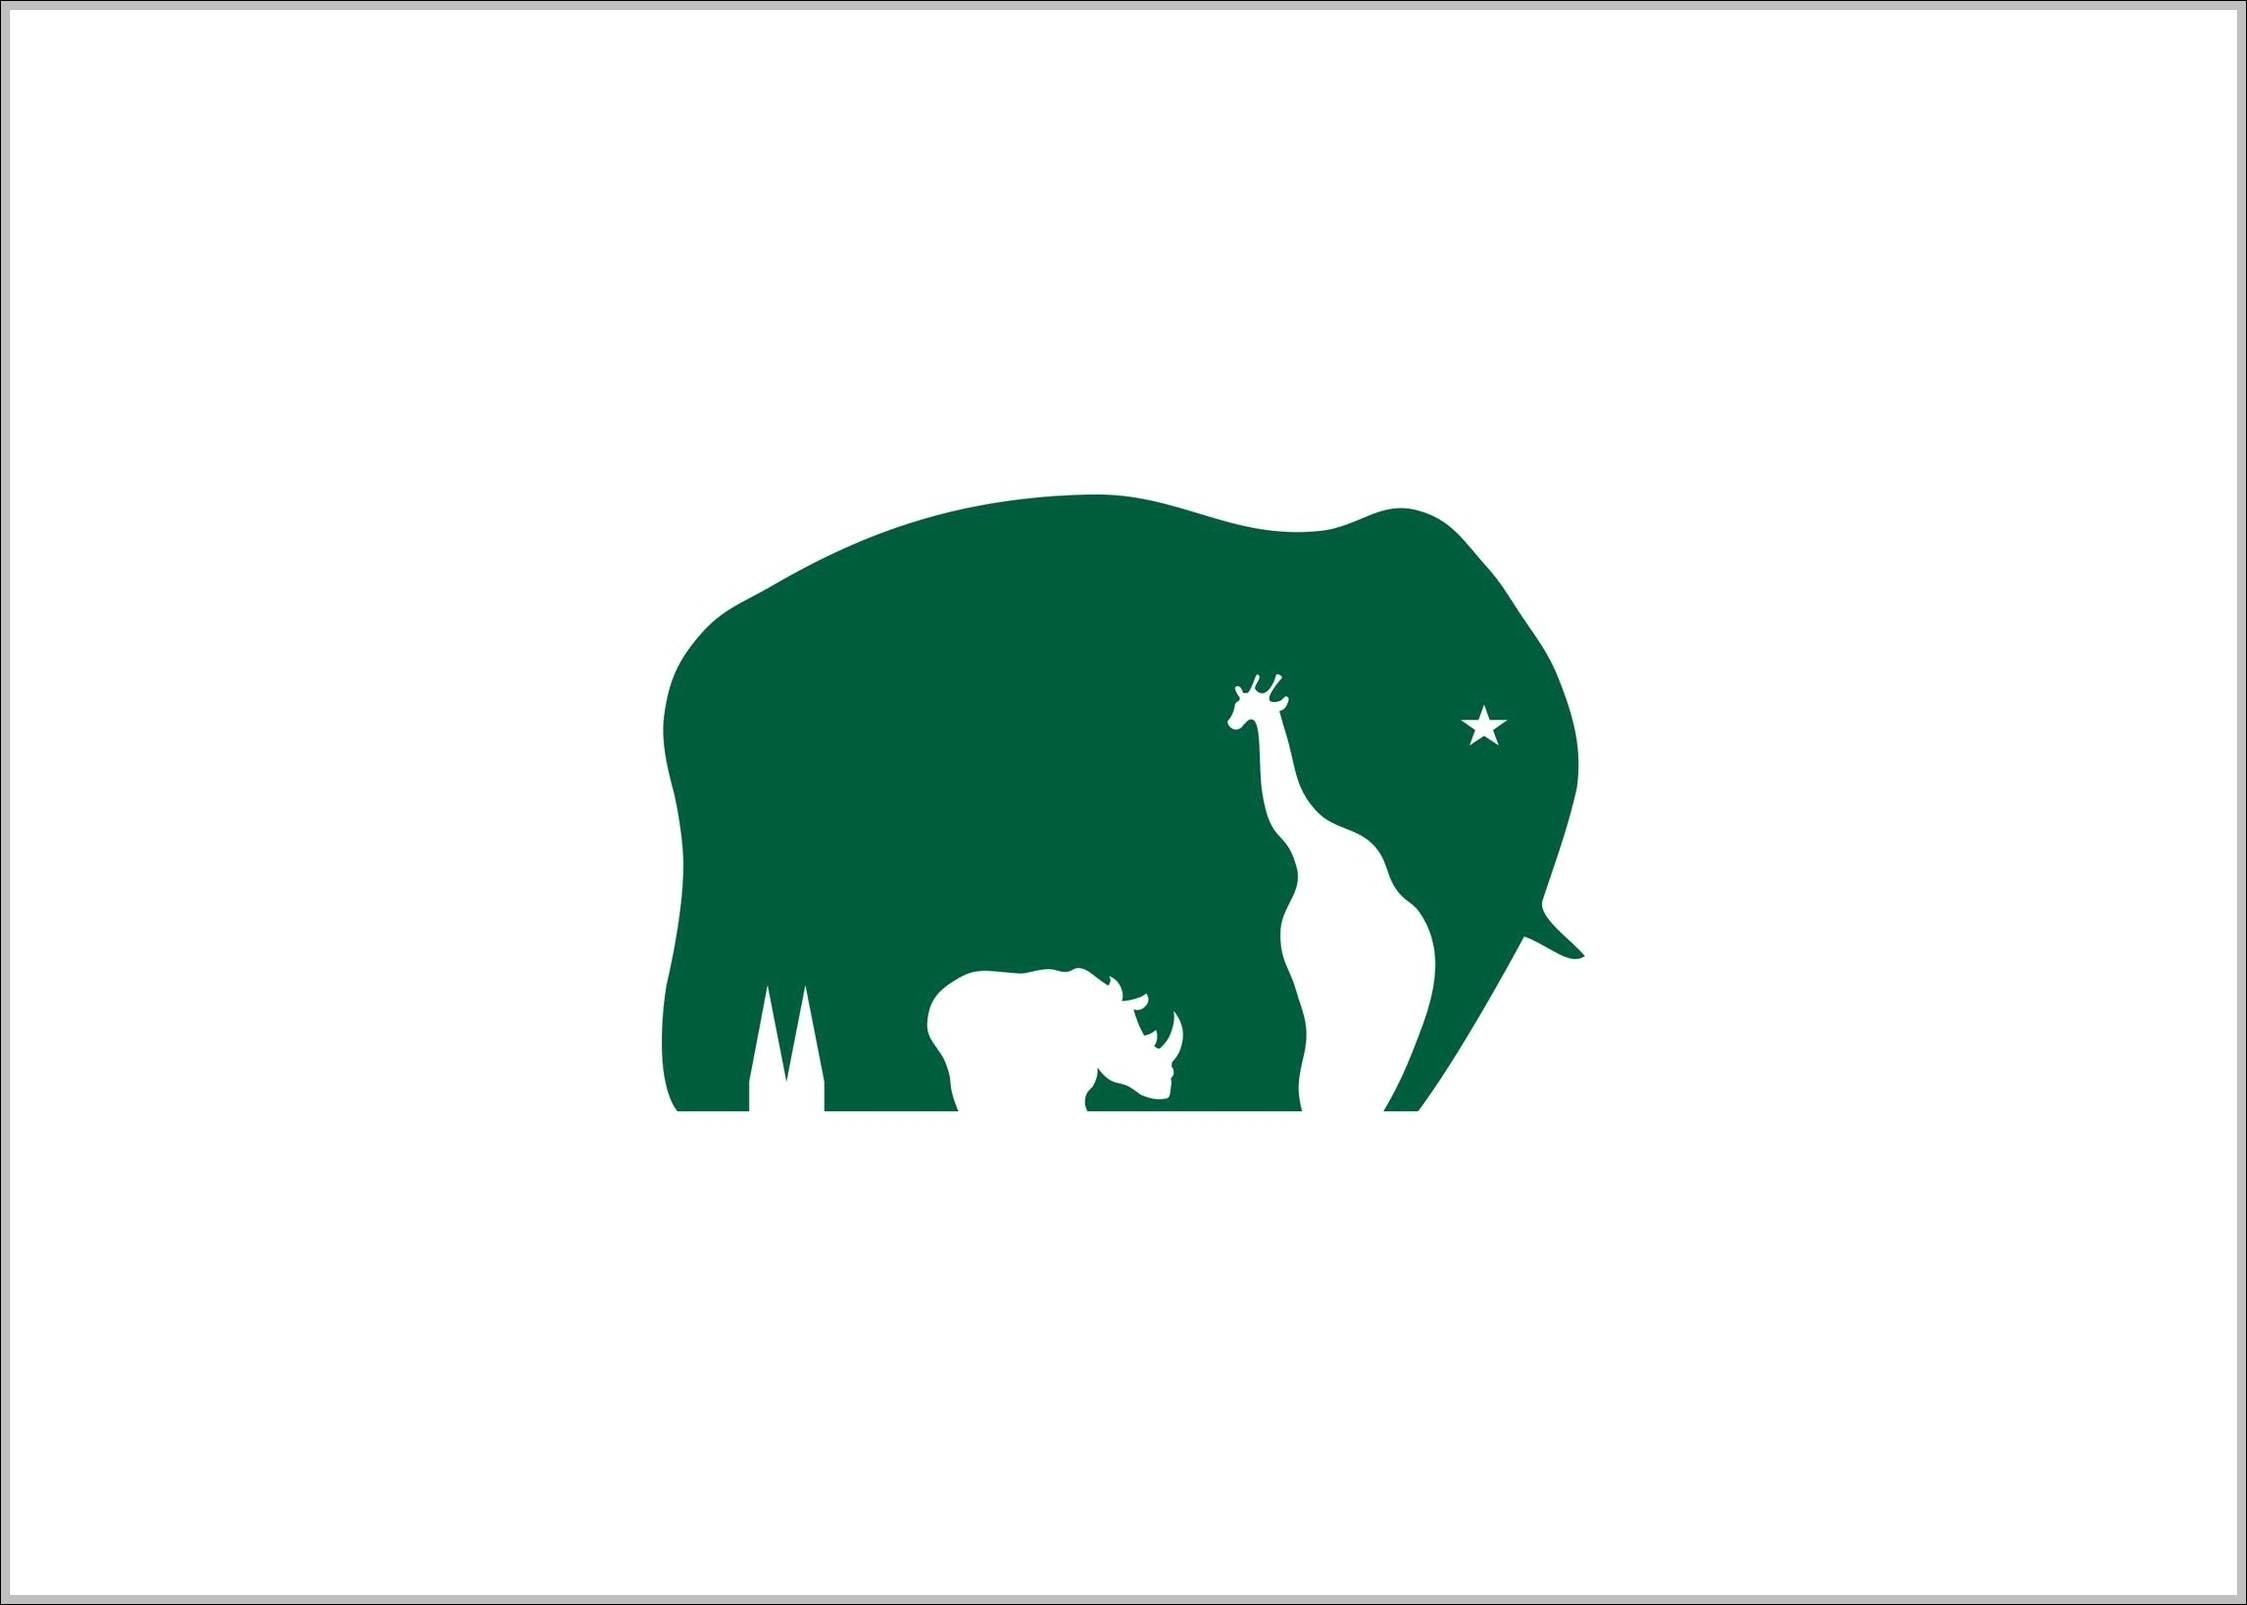 Kolner Zoo logo